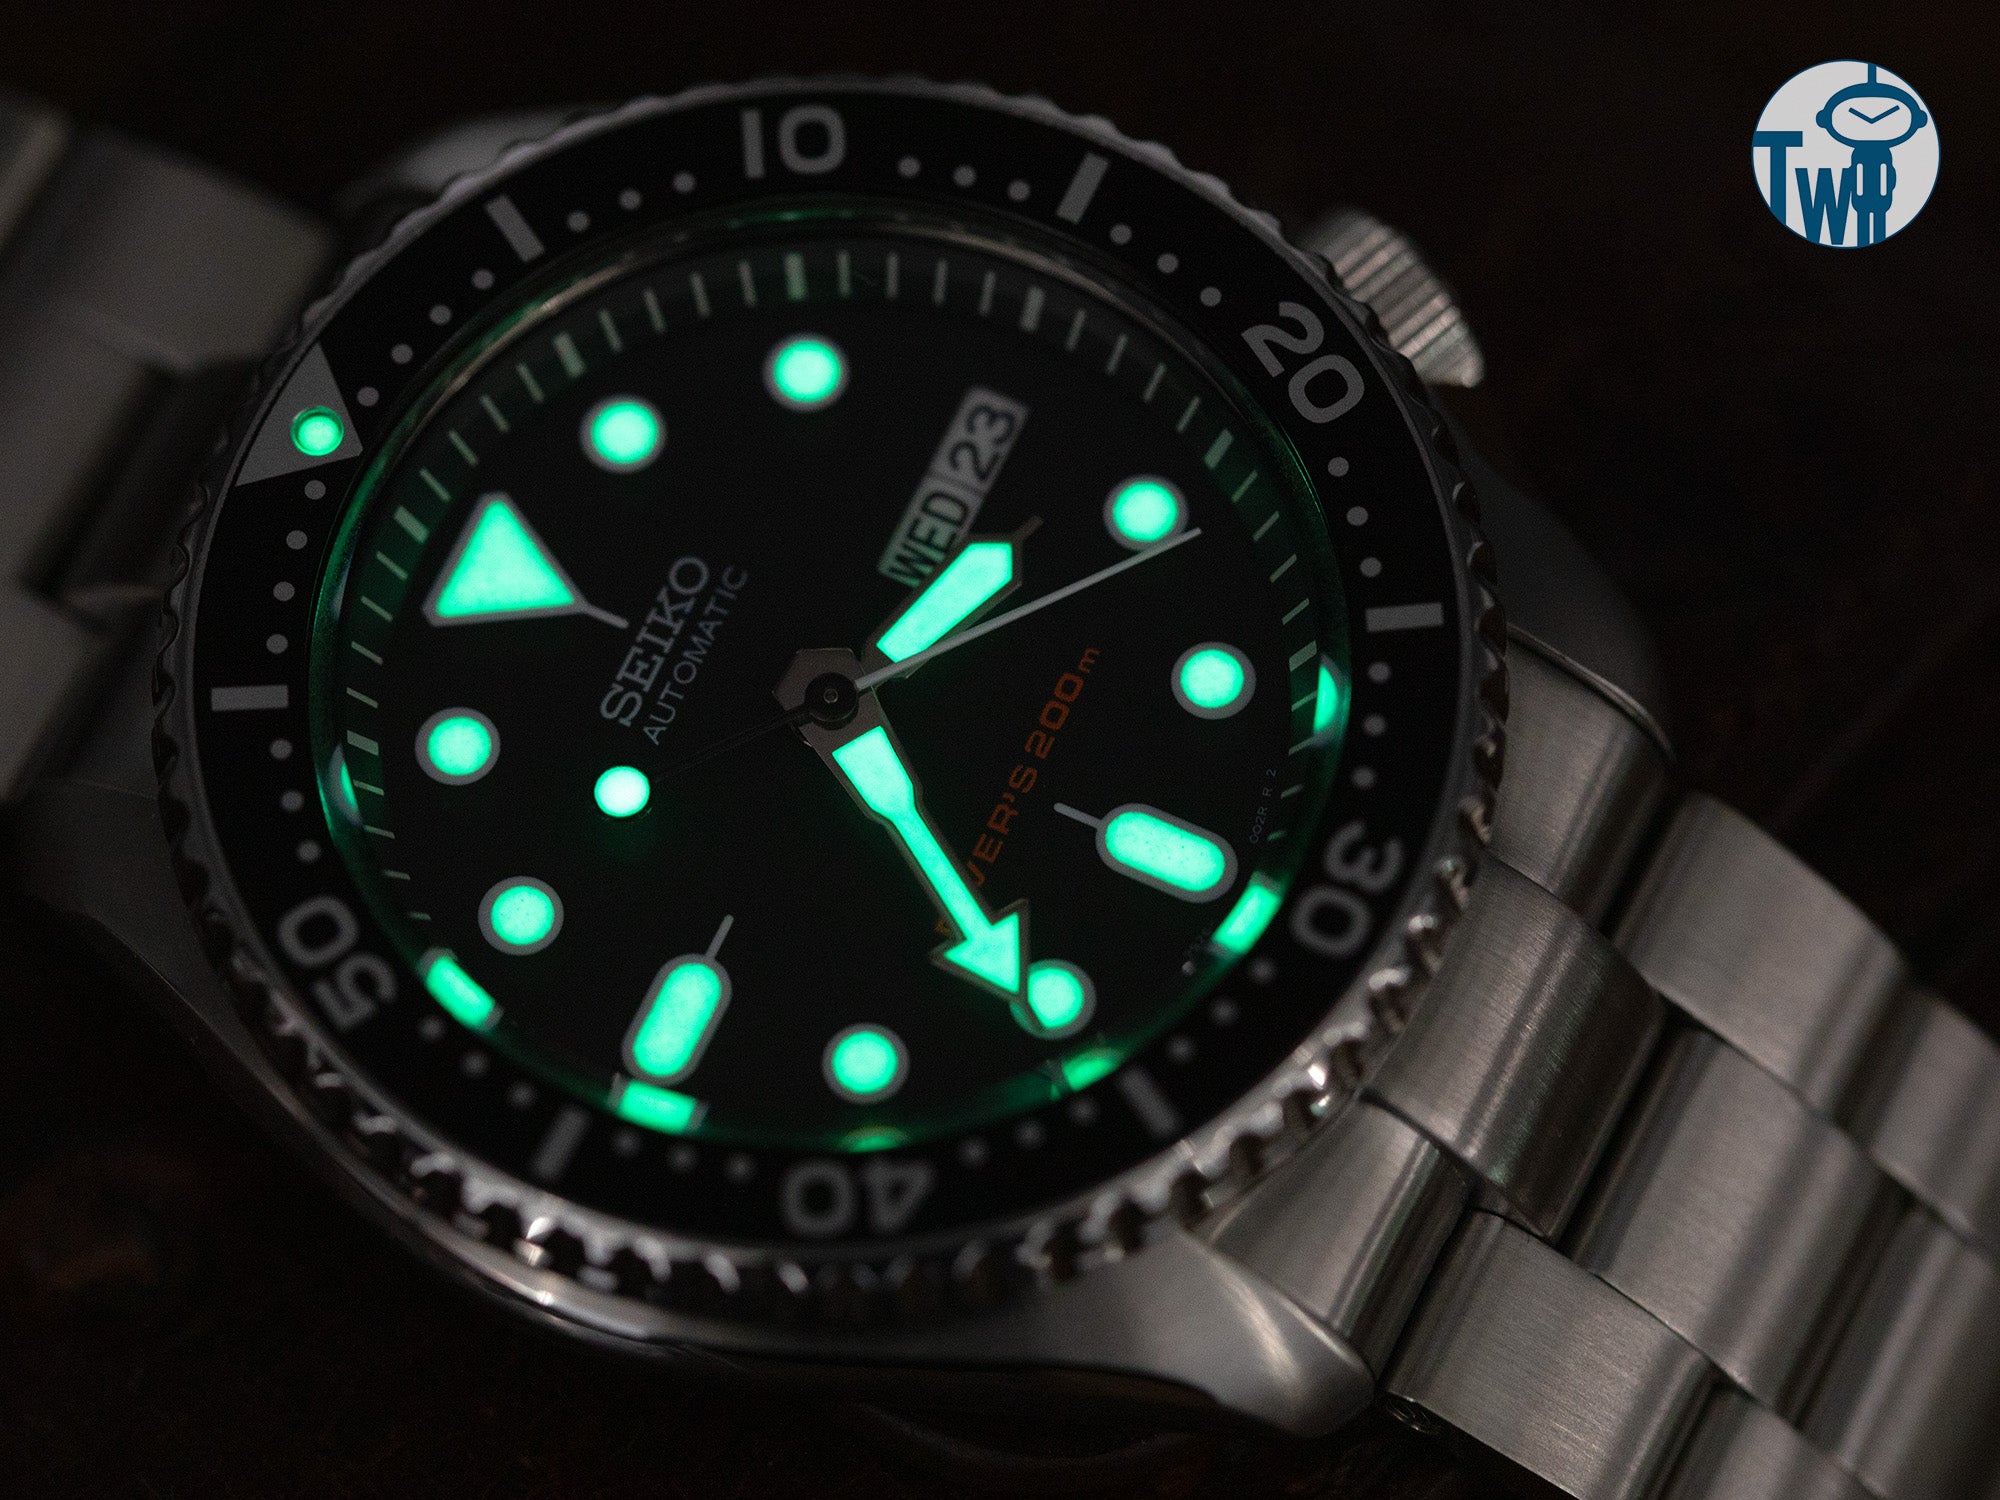 Seiko精工 SKX007 黑水鬼潛水錶配備了LumiBrite，一種卓越的發光材料。